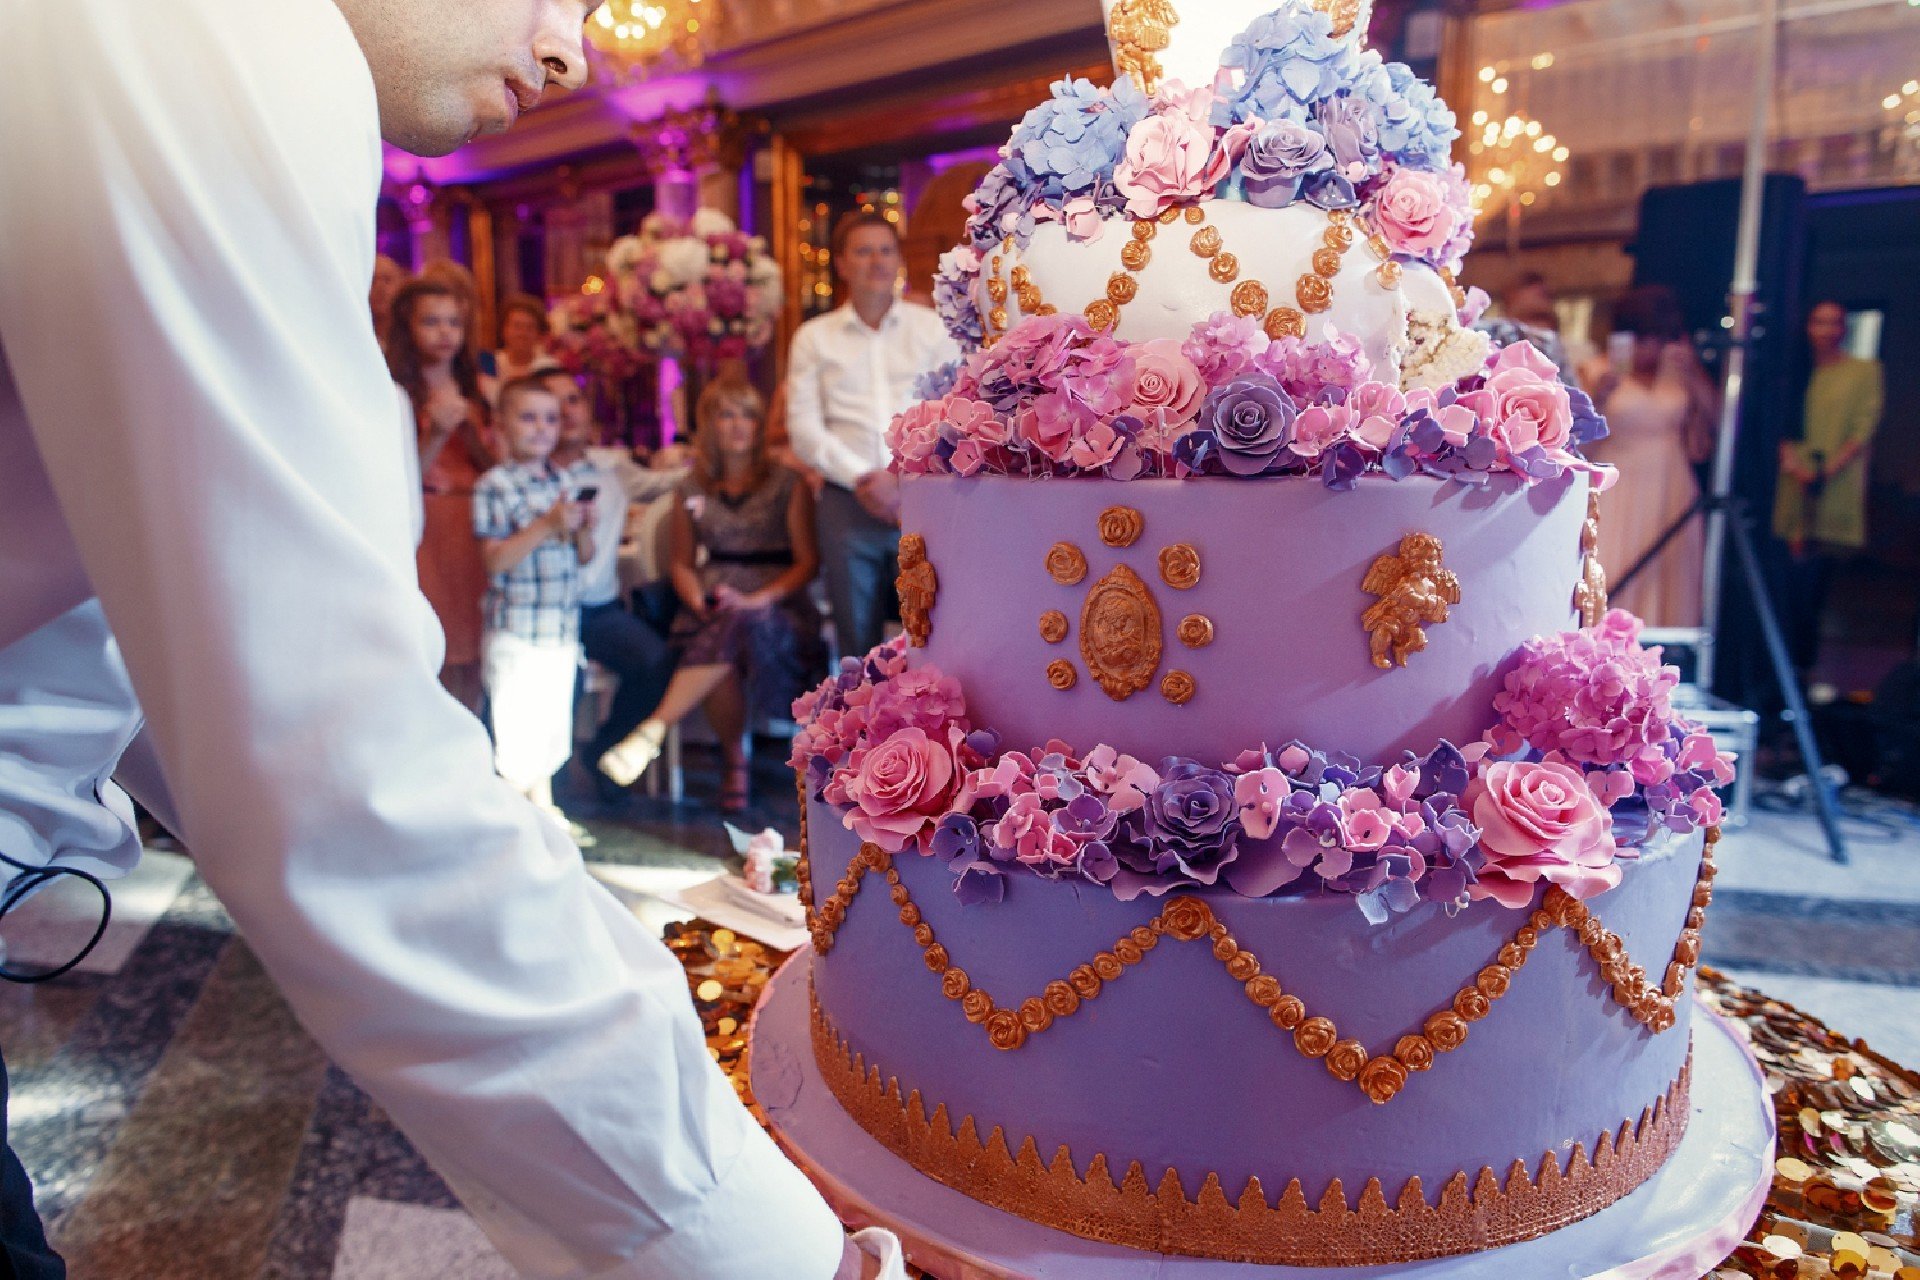 20 Ways to Decorate a Wedding Cake